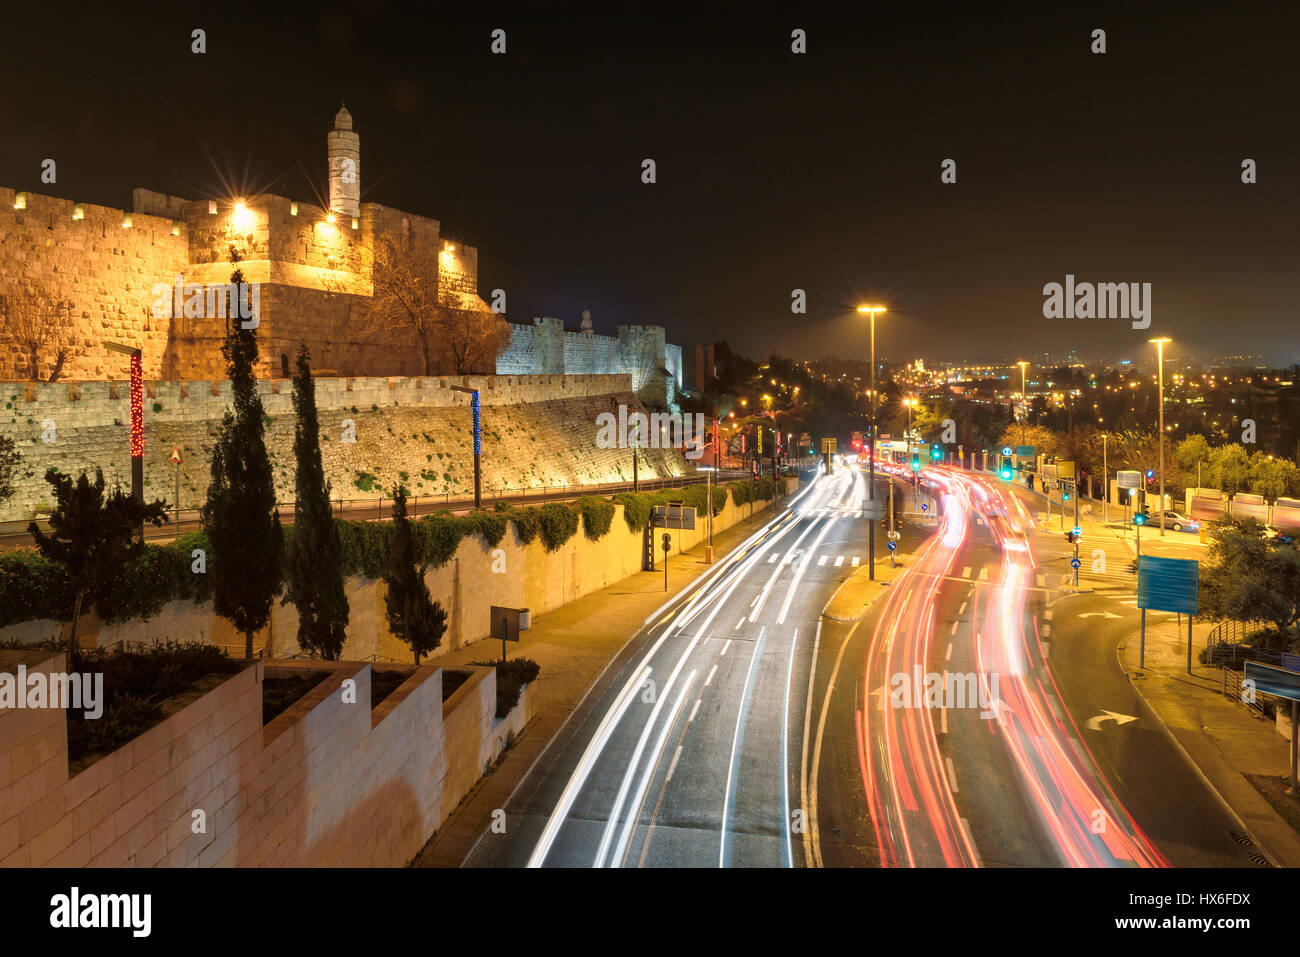 Tower of David and night street at Jerusalem Old City, Israel. Stock Photo